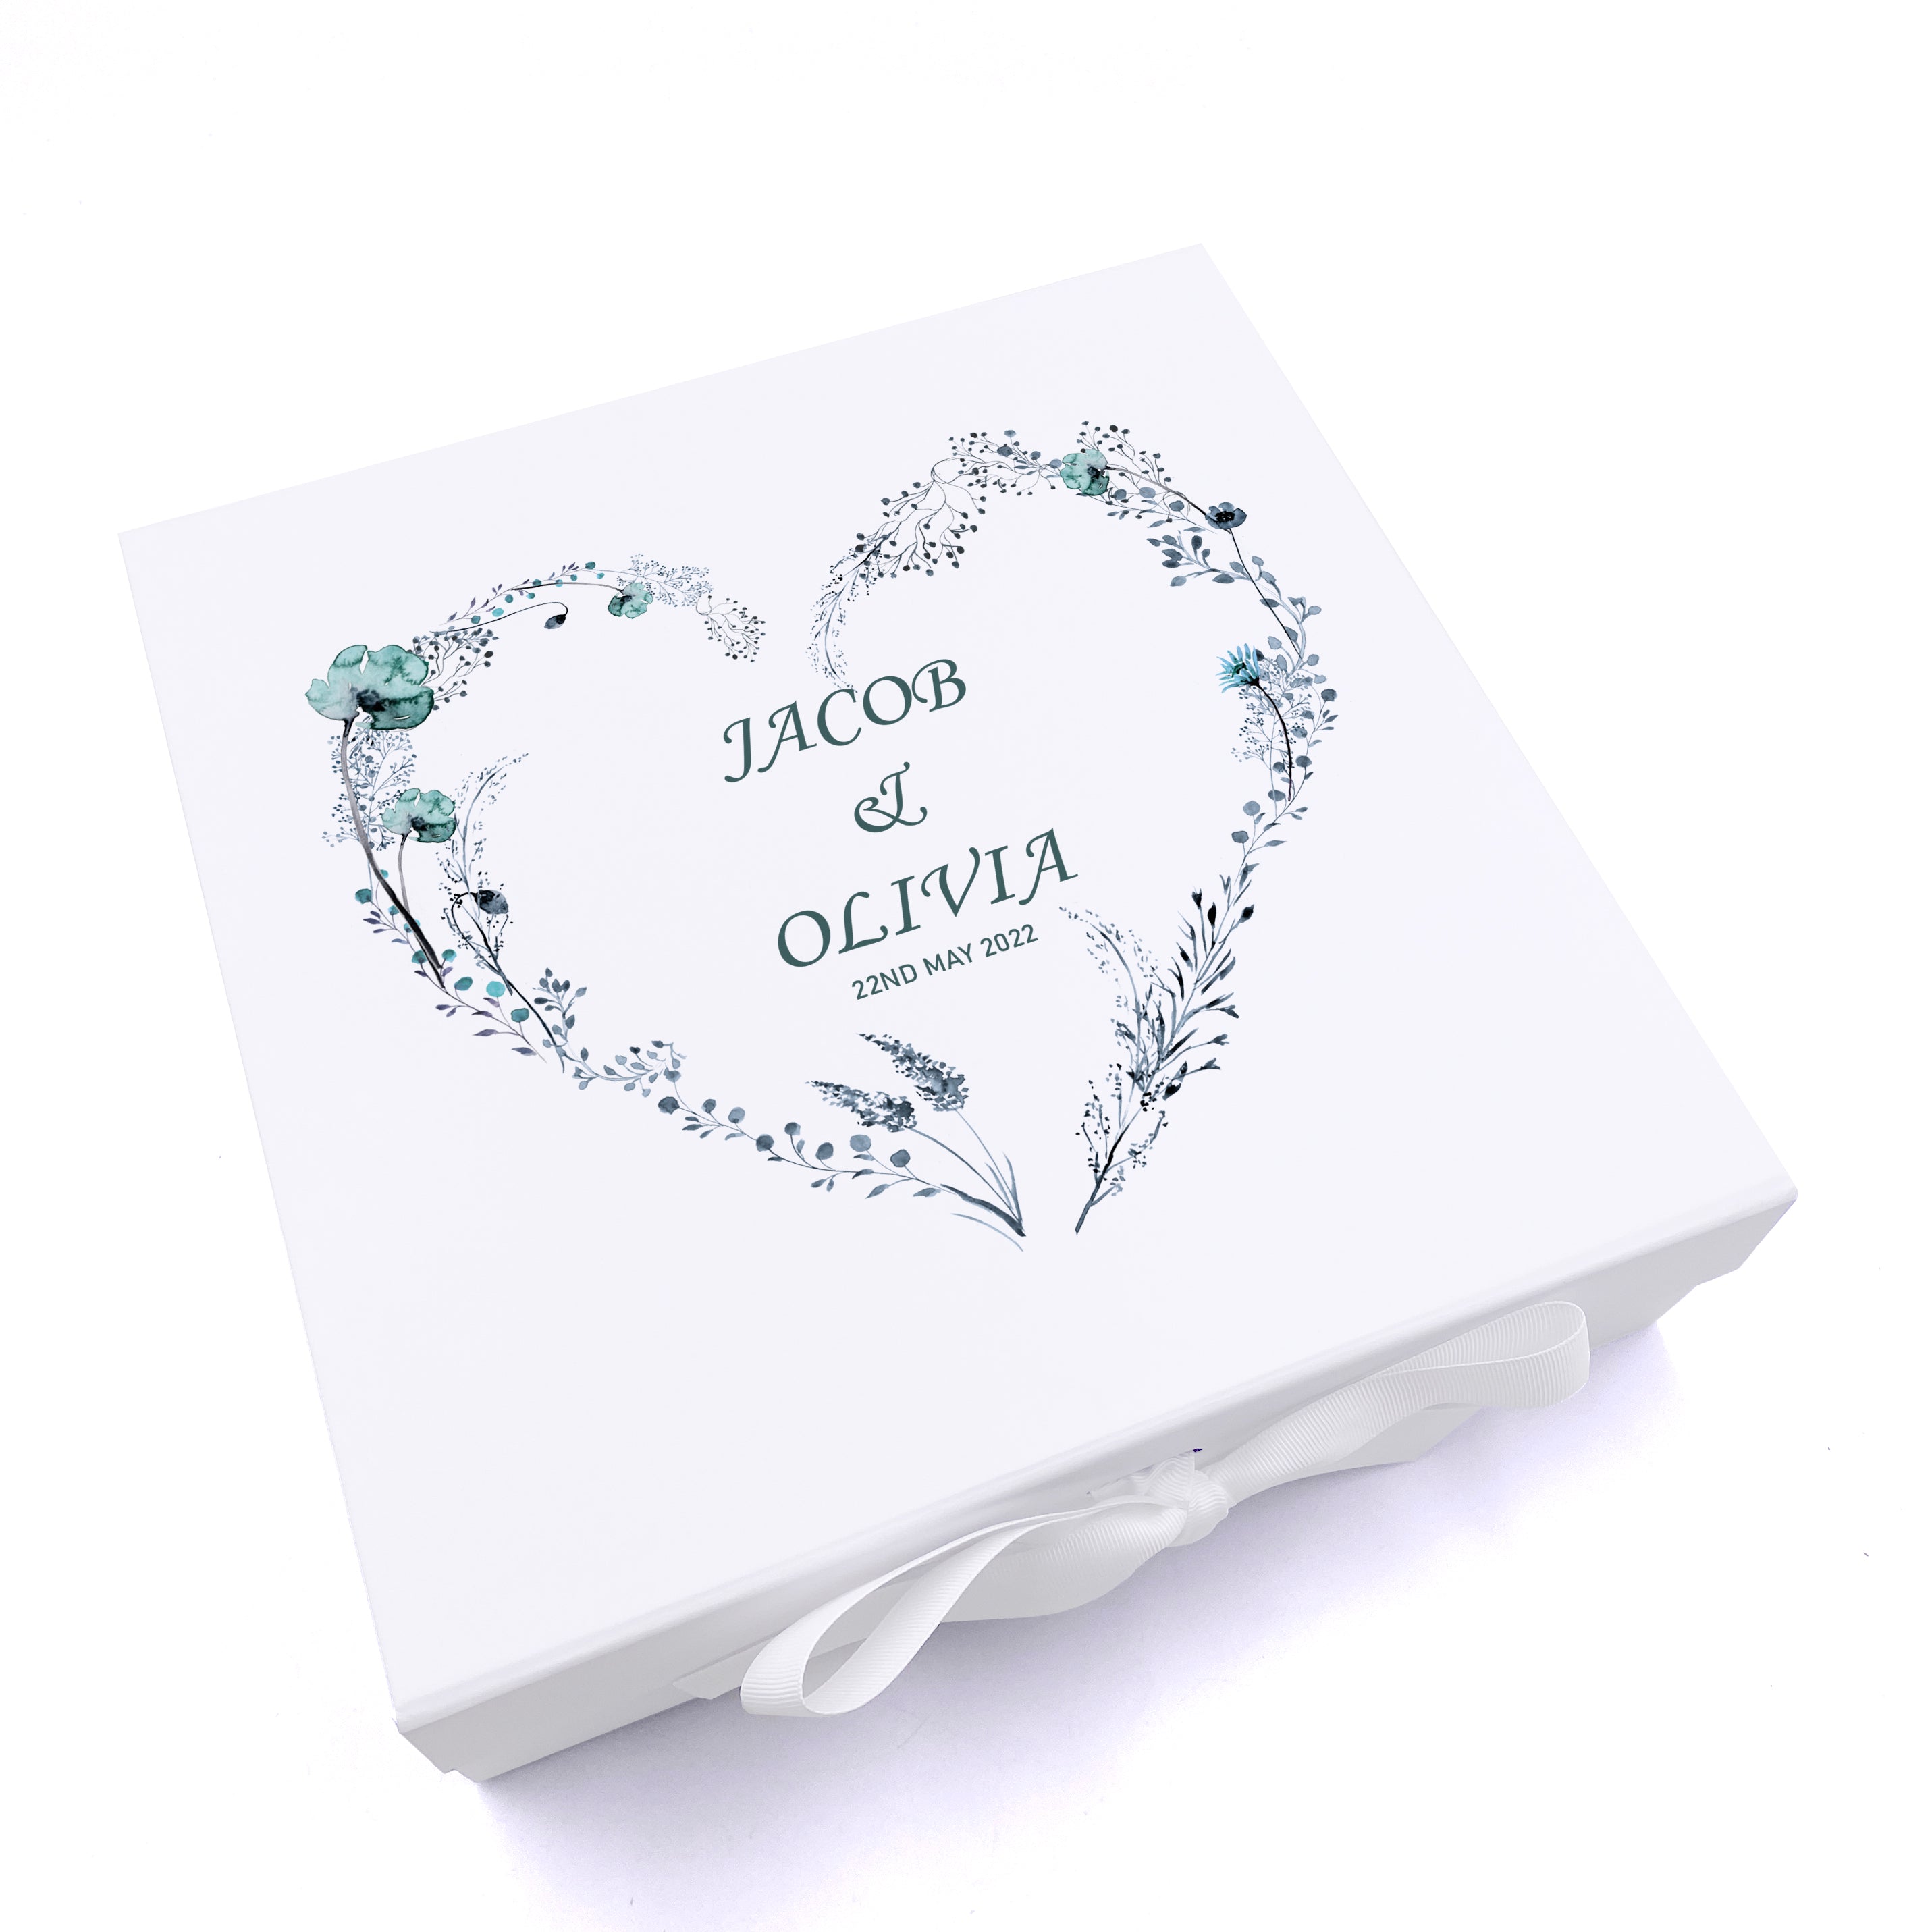 Personalised Keepsake Box Wedding Memory box Any Wording Gift